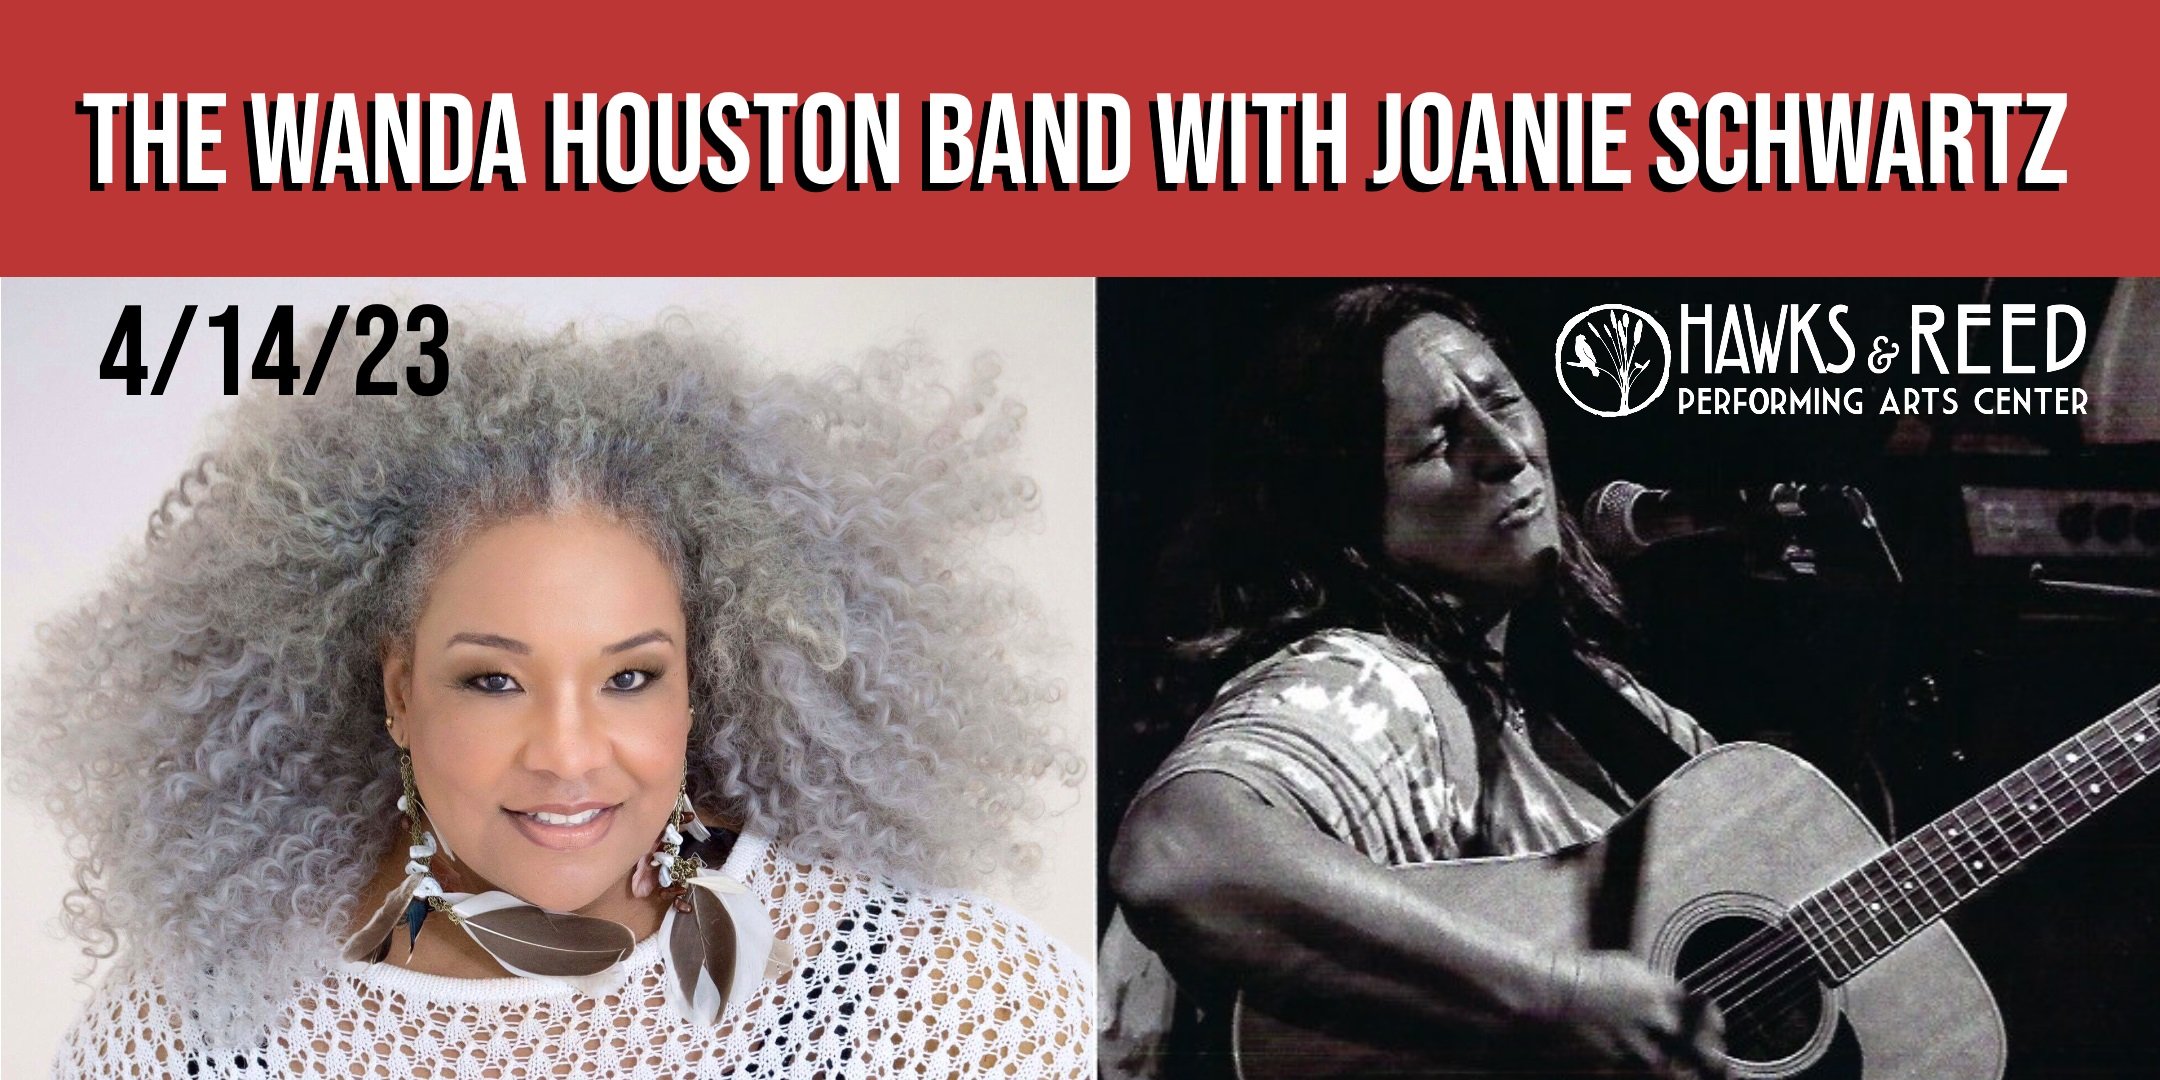 The Wanda Houston Band with Joanie Schwartz